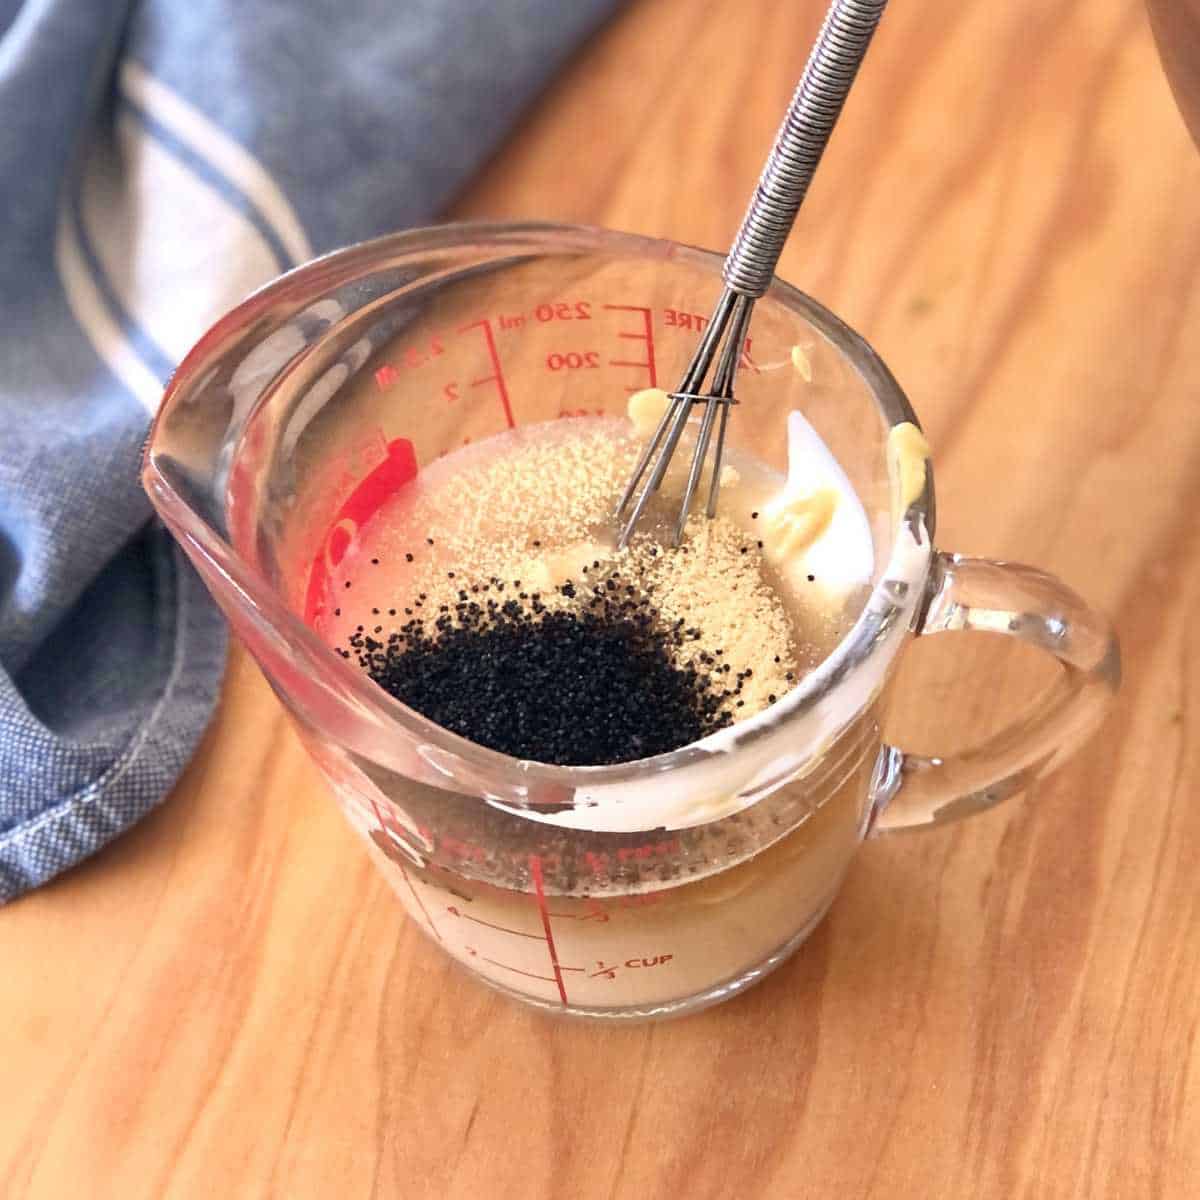 Vegan poppy seed dressing ingredients in a glass measuring cup.